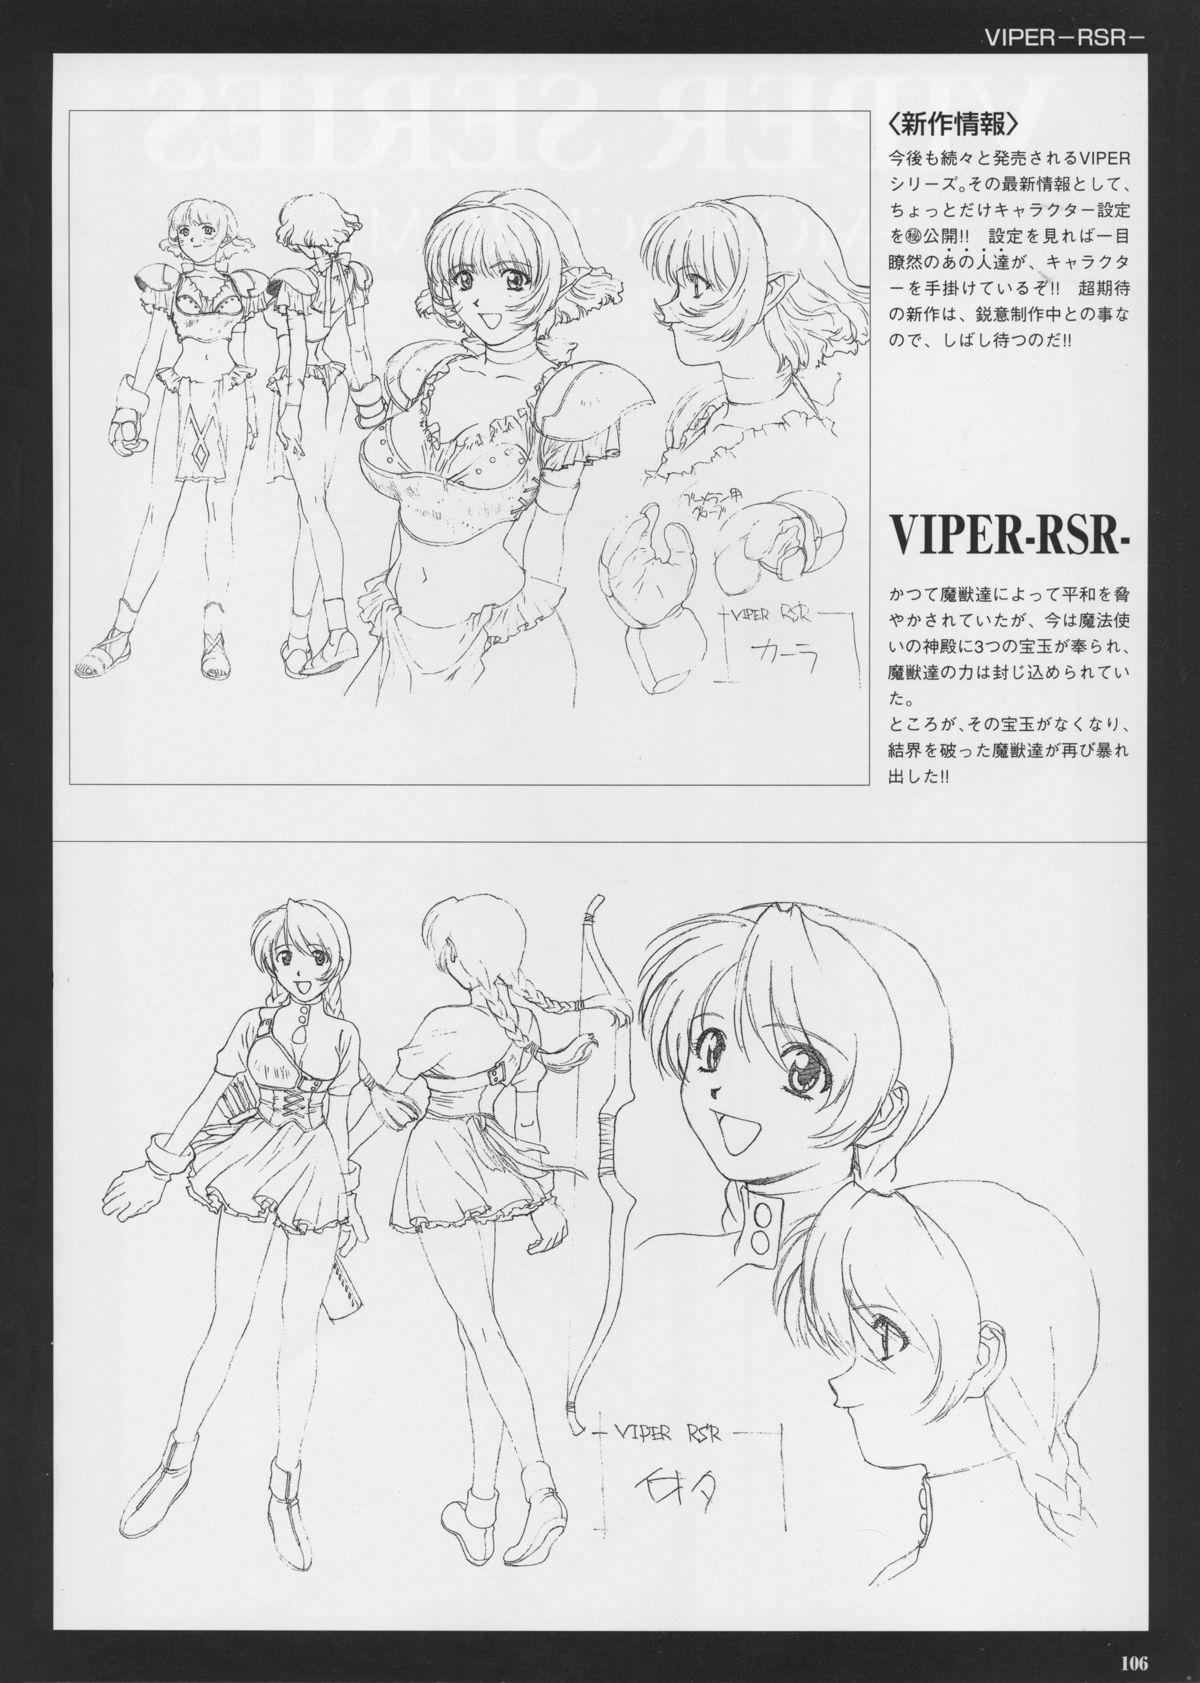 VIPER Series Official Artbook IV 106